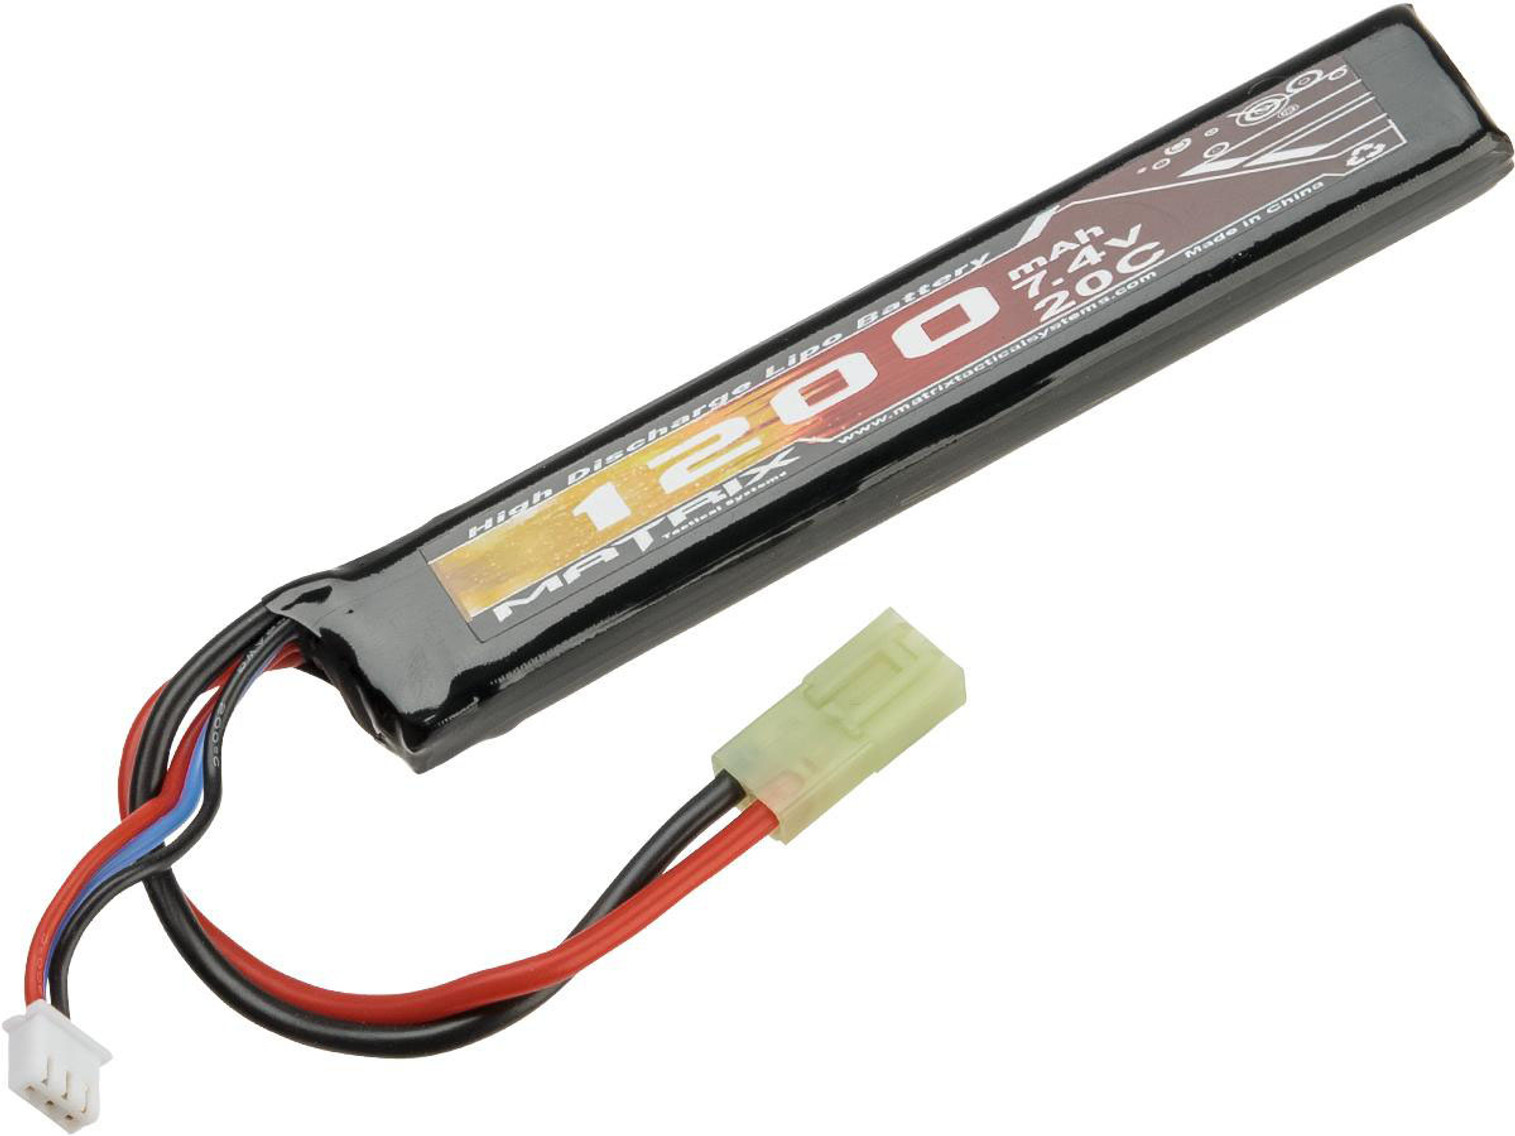 Matrix High Performance 7.4V Stick Type Airsoft LiPo Battery (Configuration: 1200mAh / 20C / Small Tamiya / Short)